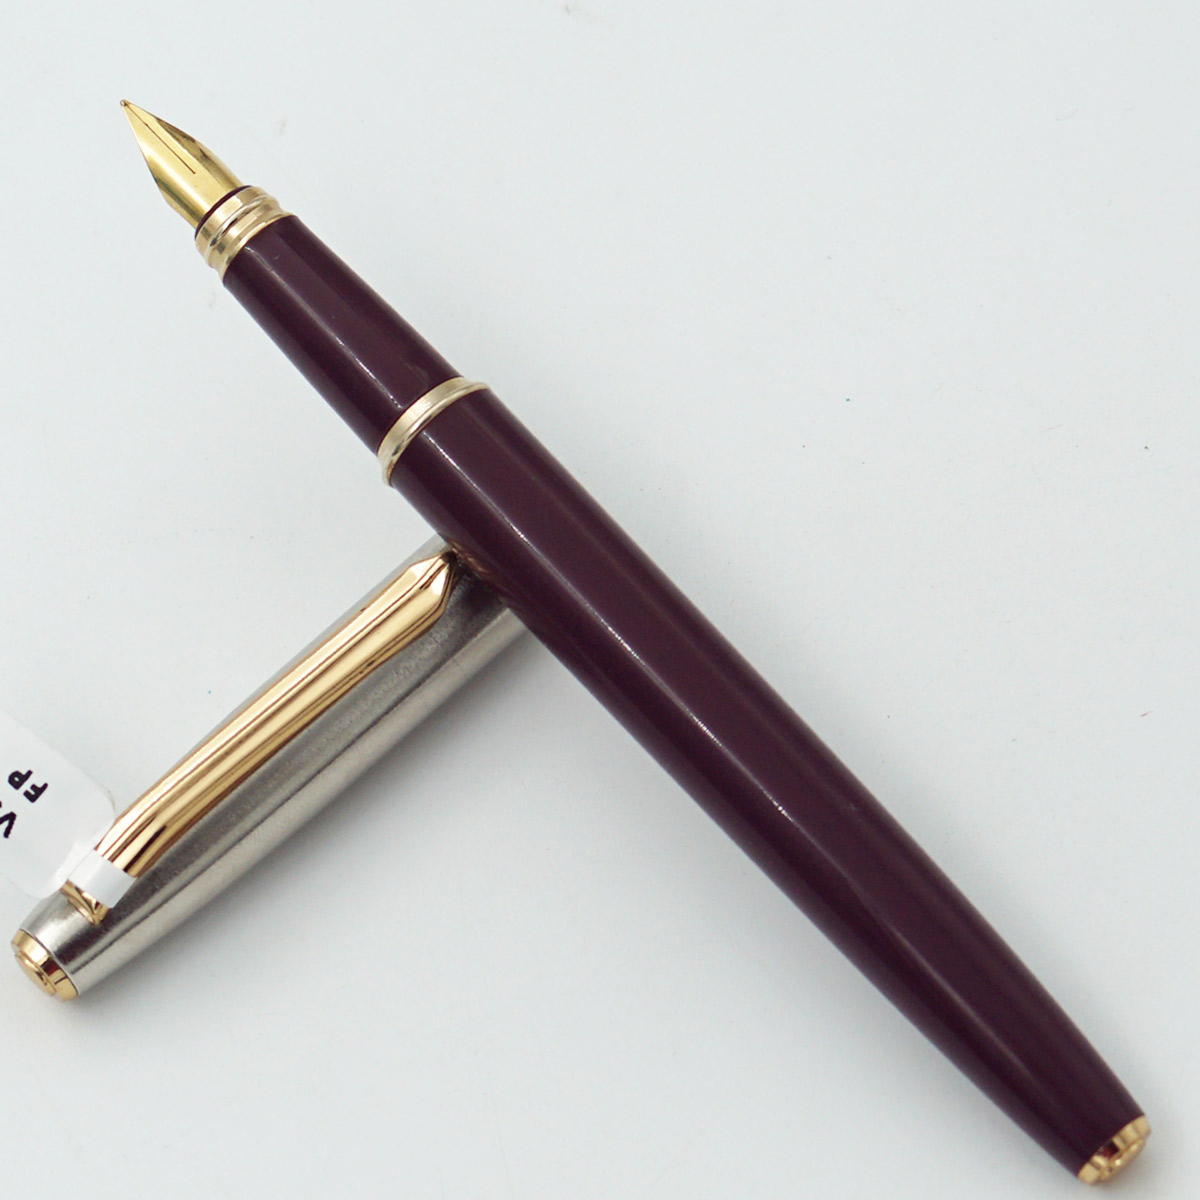 Vsign Stride Maroon Color Body With Golden Color Clip Fine Nib Eye Dropper Model Fountain Pen(3 in 1) SKU 24471